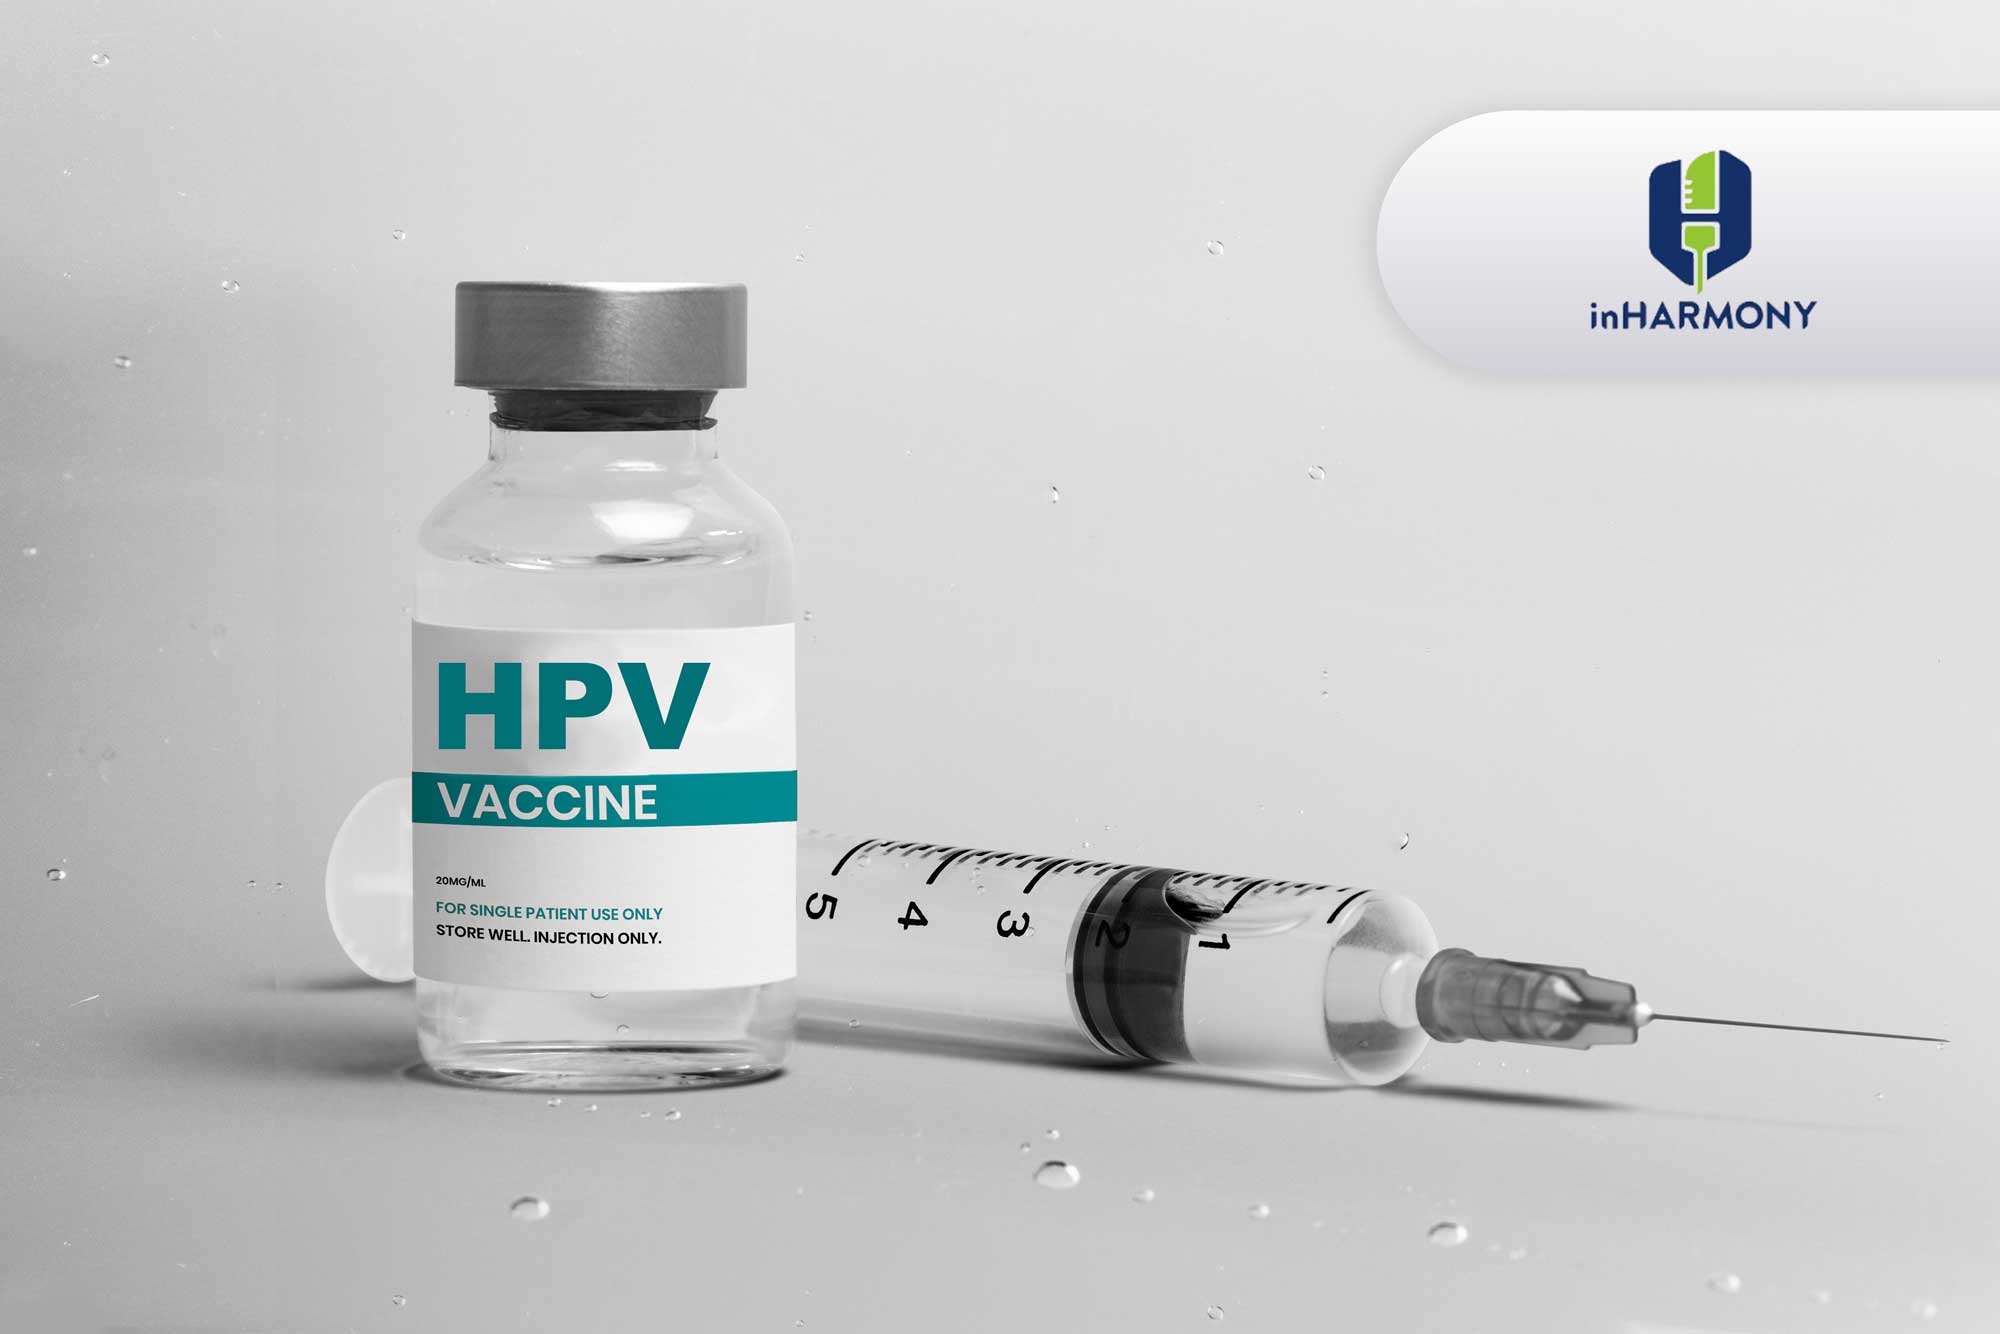 vaksin-hpv-inharmony_1691380144.jpg